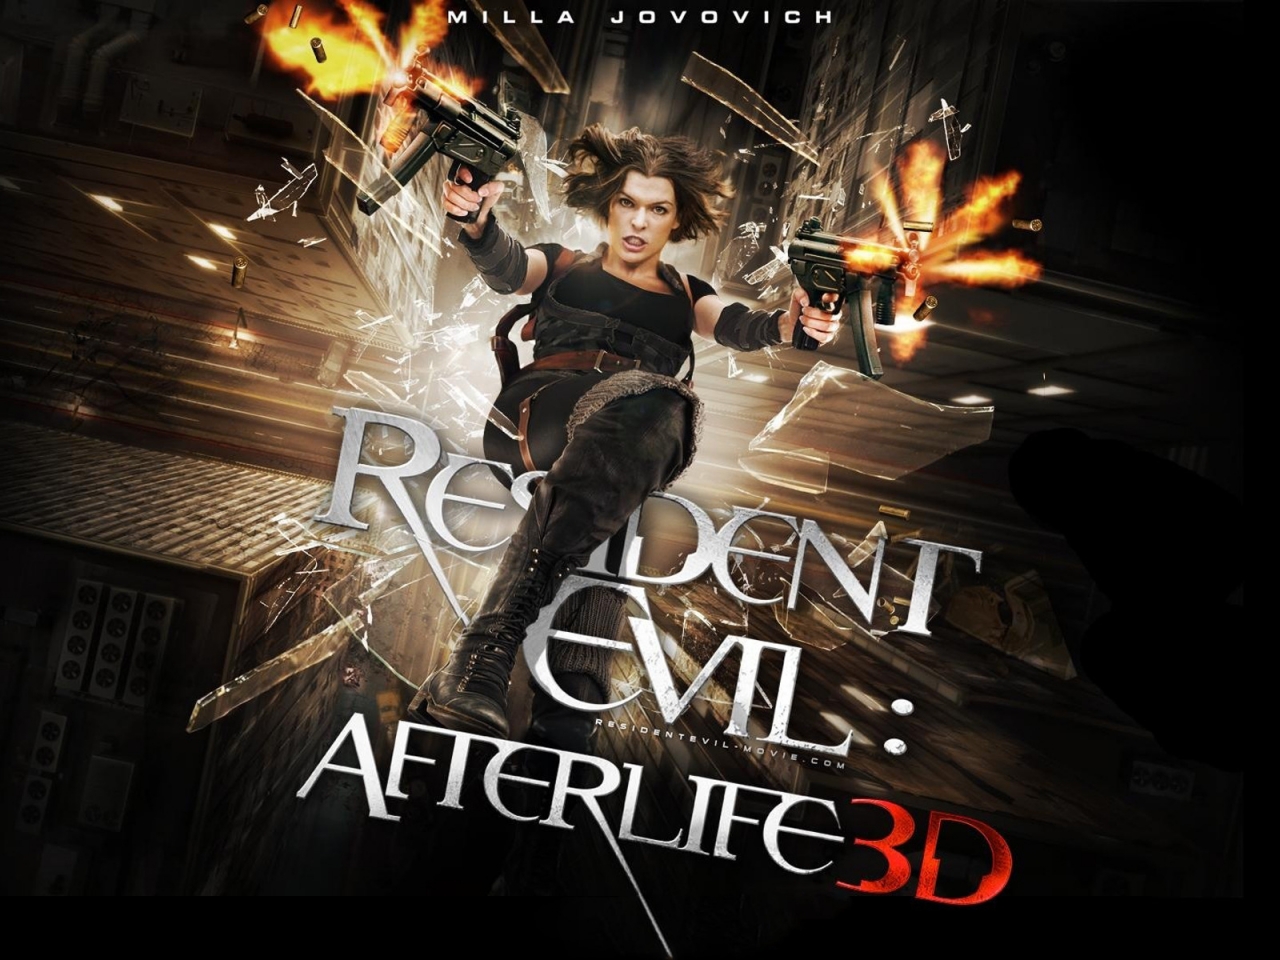 Resident Evil Afterlife 3D Poster for 1280 x 960 resolution